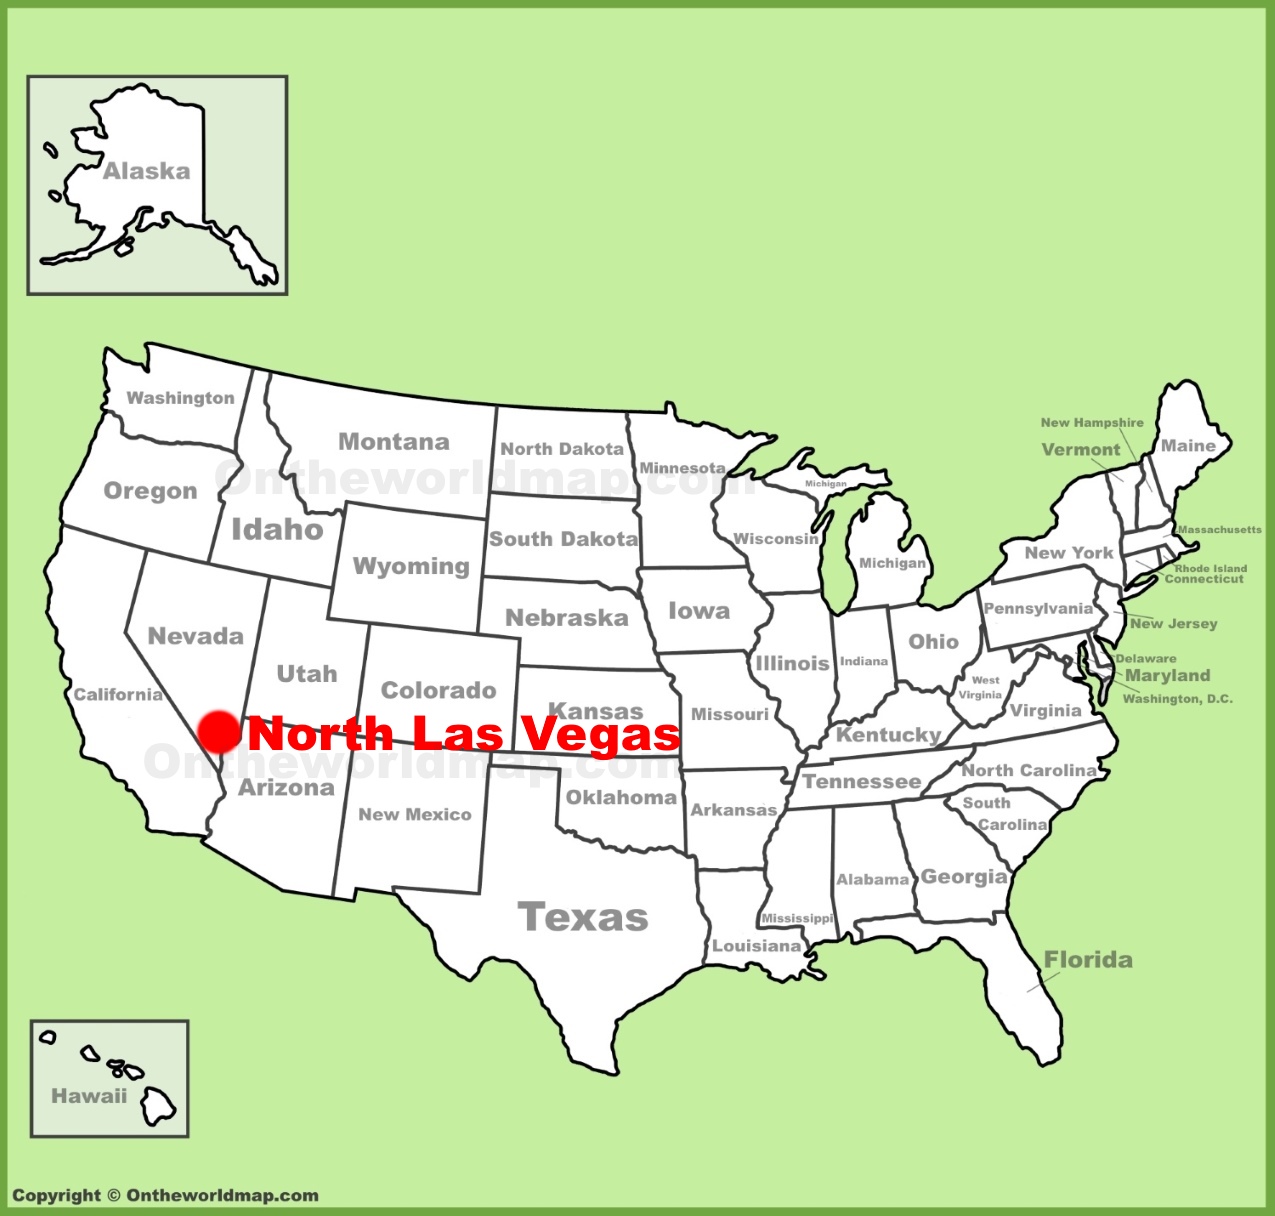 North Las Vegas Location On The U S Map